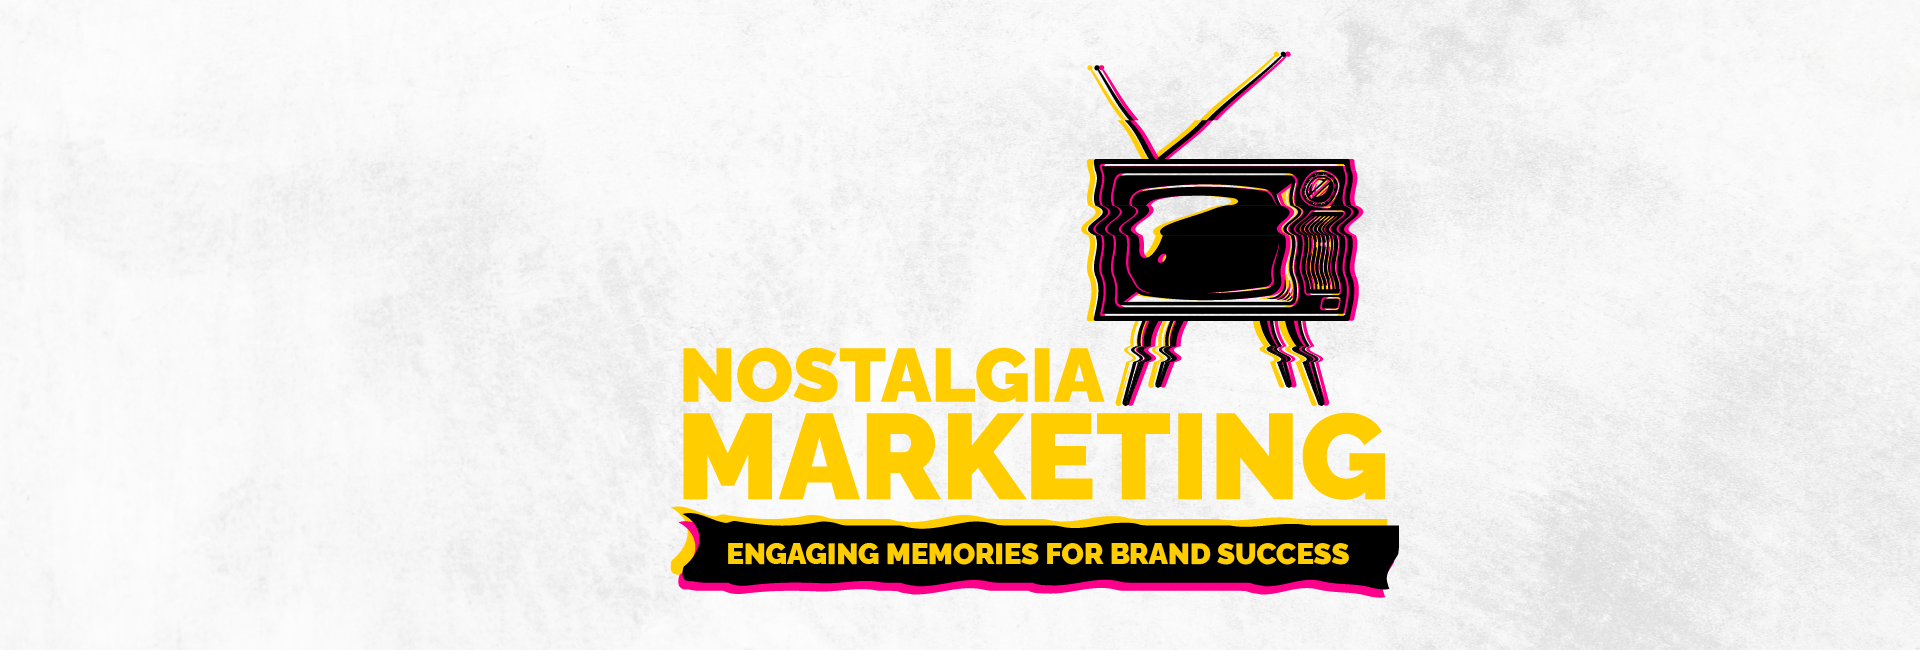 Nostalgia Marketing: Engaging Memories for Brand Success